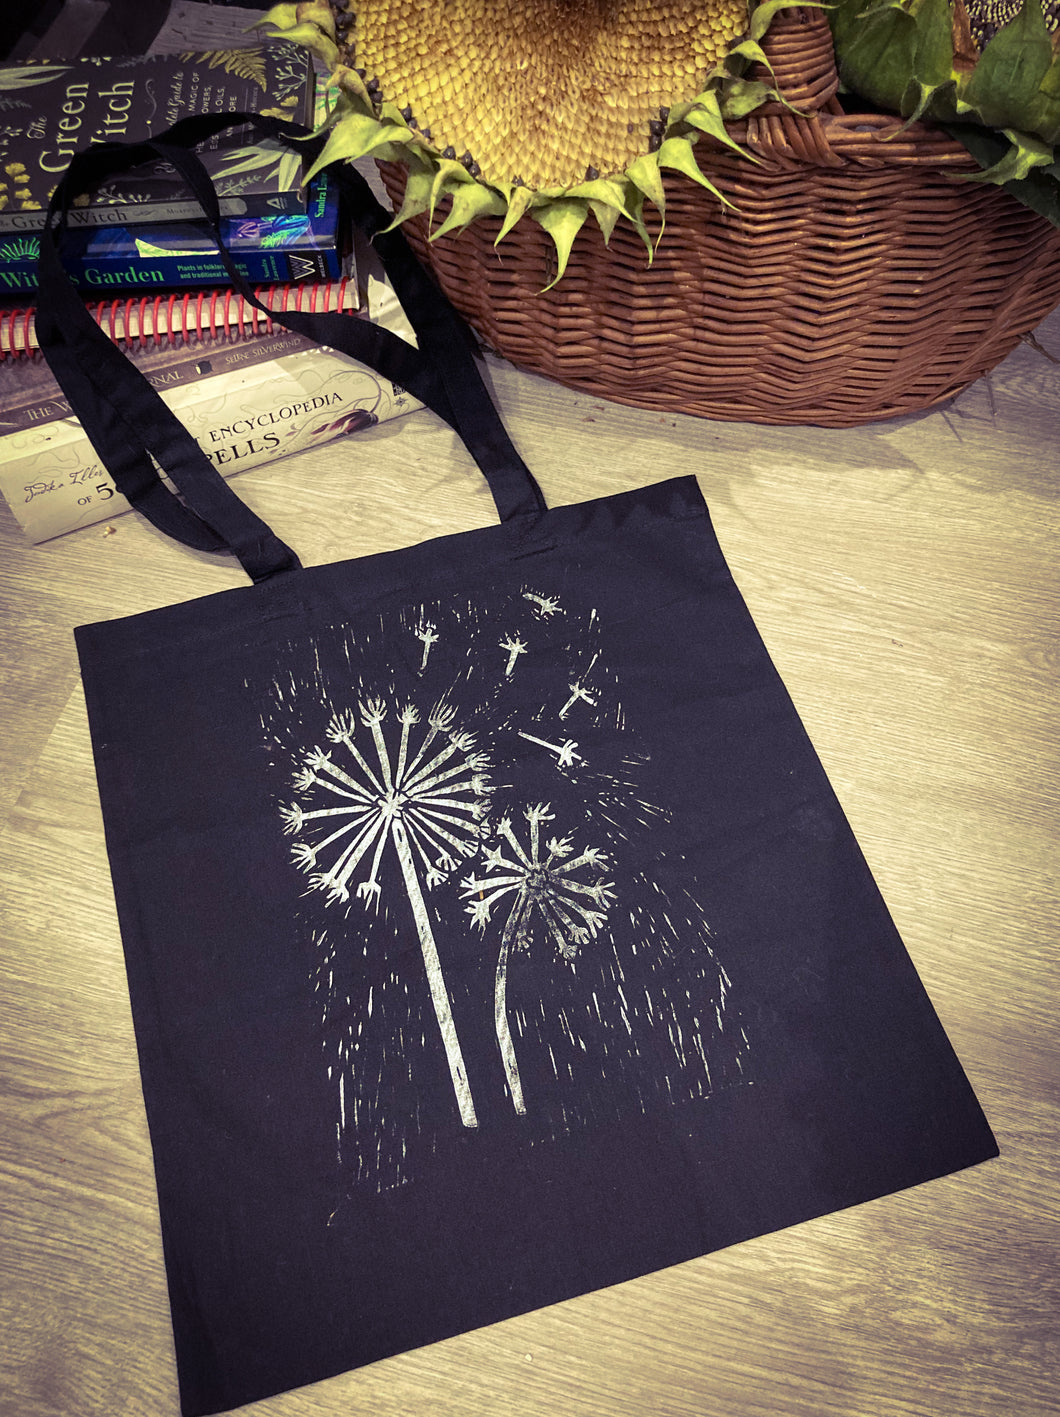 Make a Wish Black tote bag.